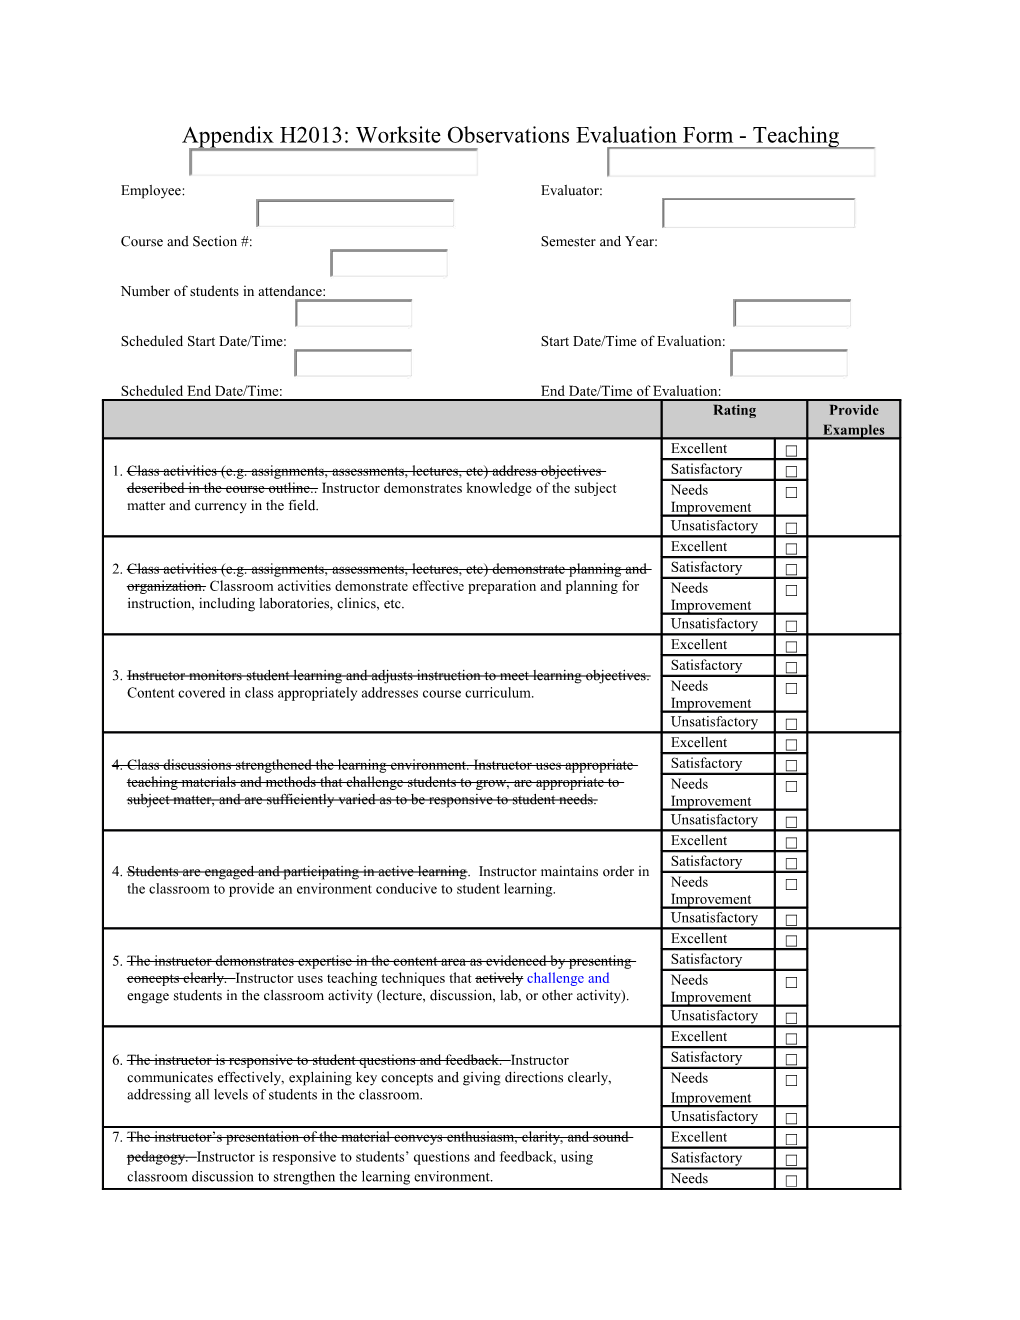 Appendix H2013: Worksite Observations Evaluation Form - Teaching